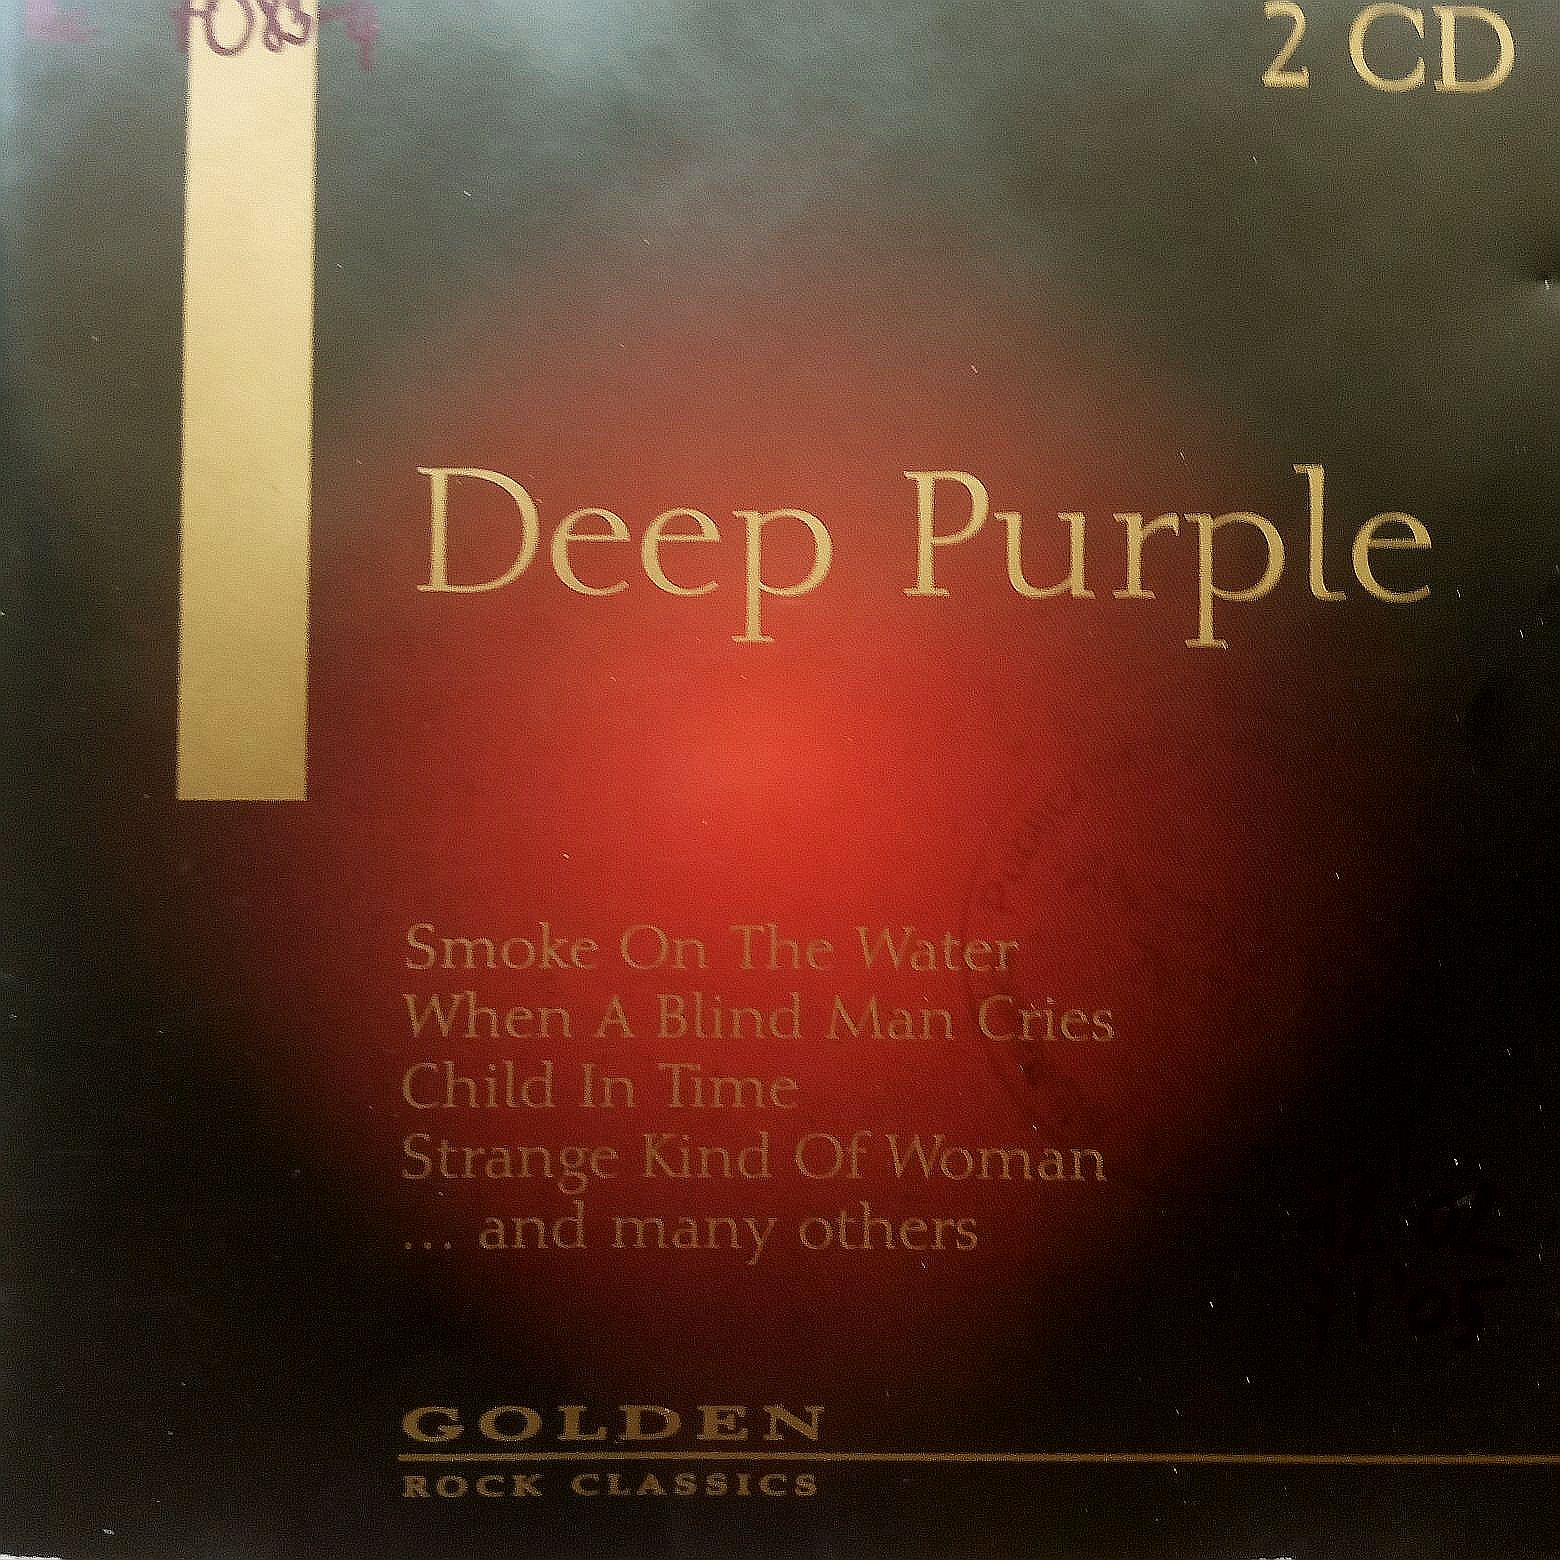 Deep Purple – Golden Rock Classics